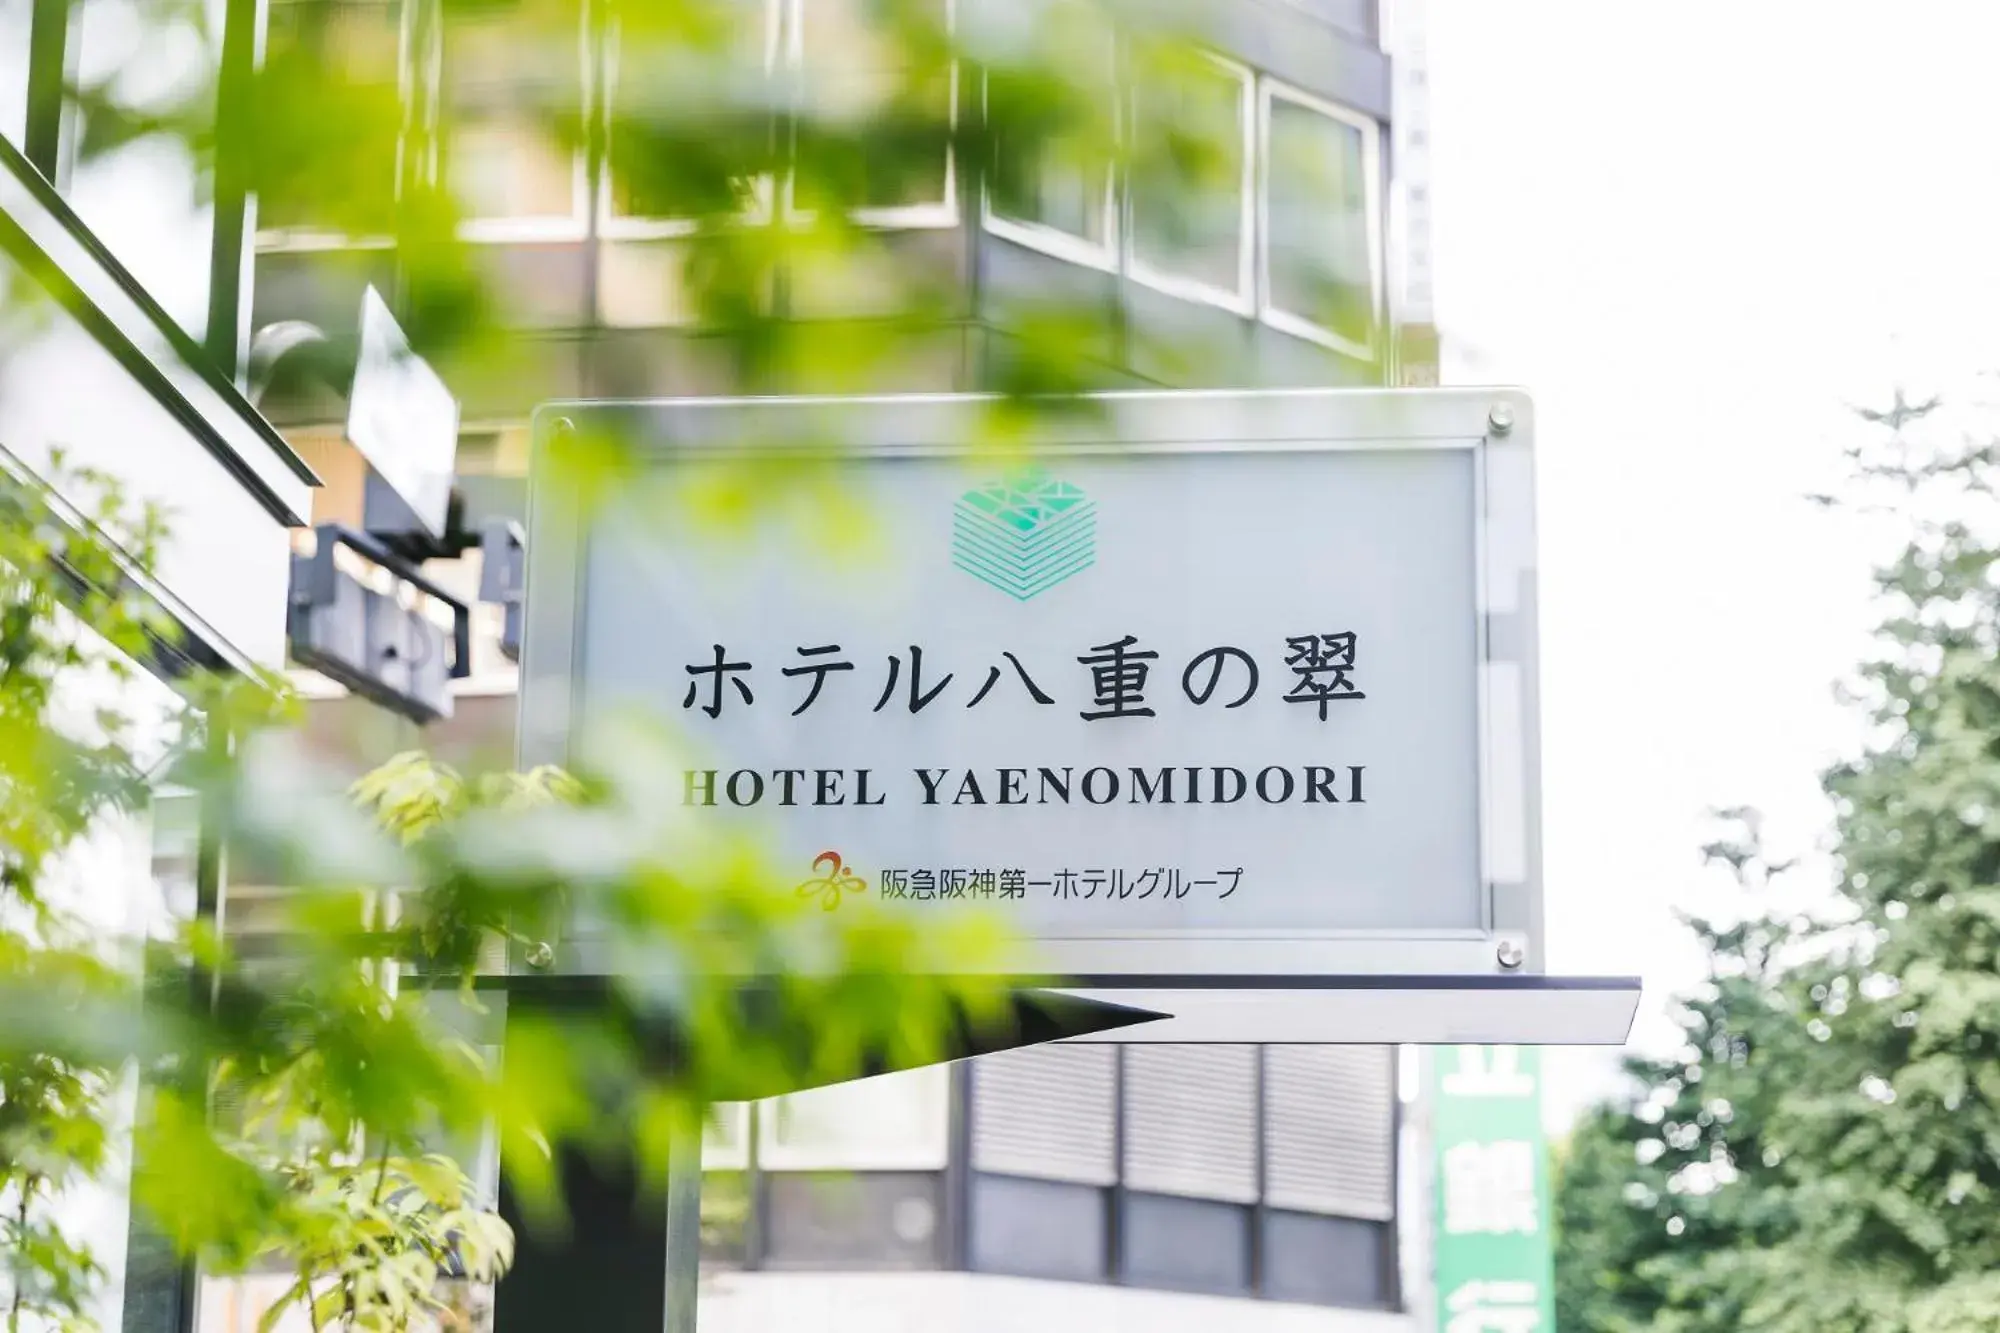 Property logo or sign in Hotel Yaenomidori Tokyo